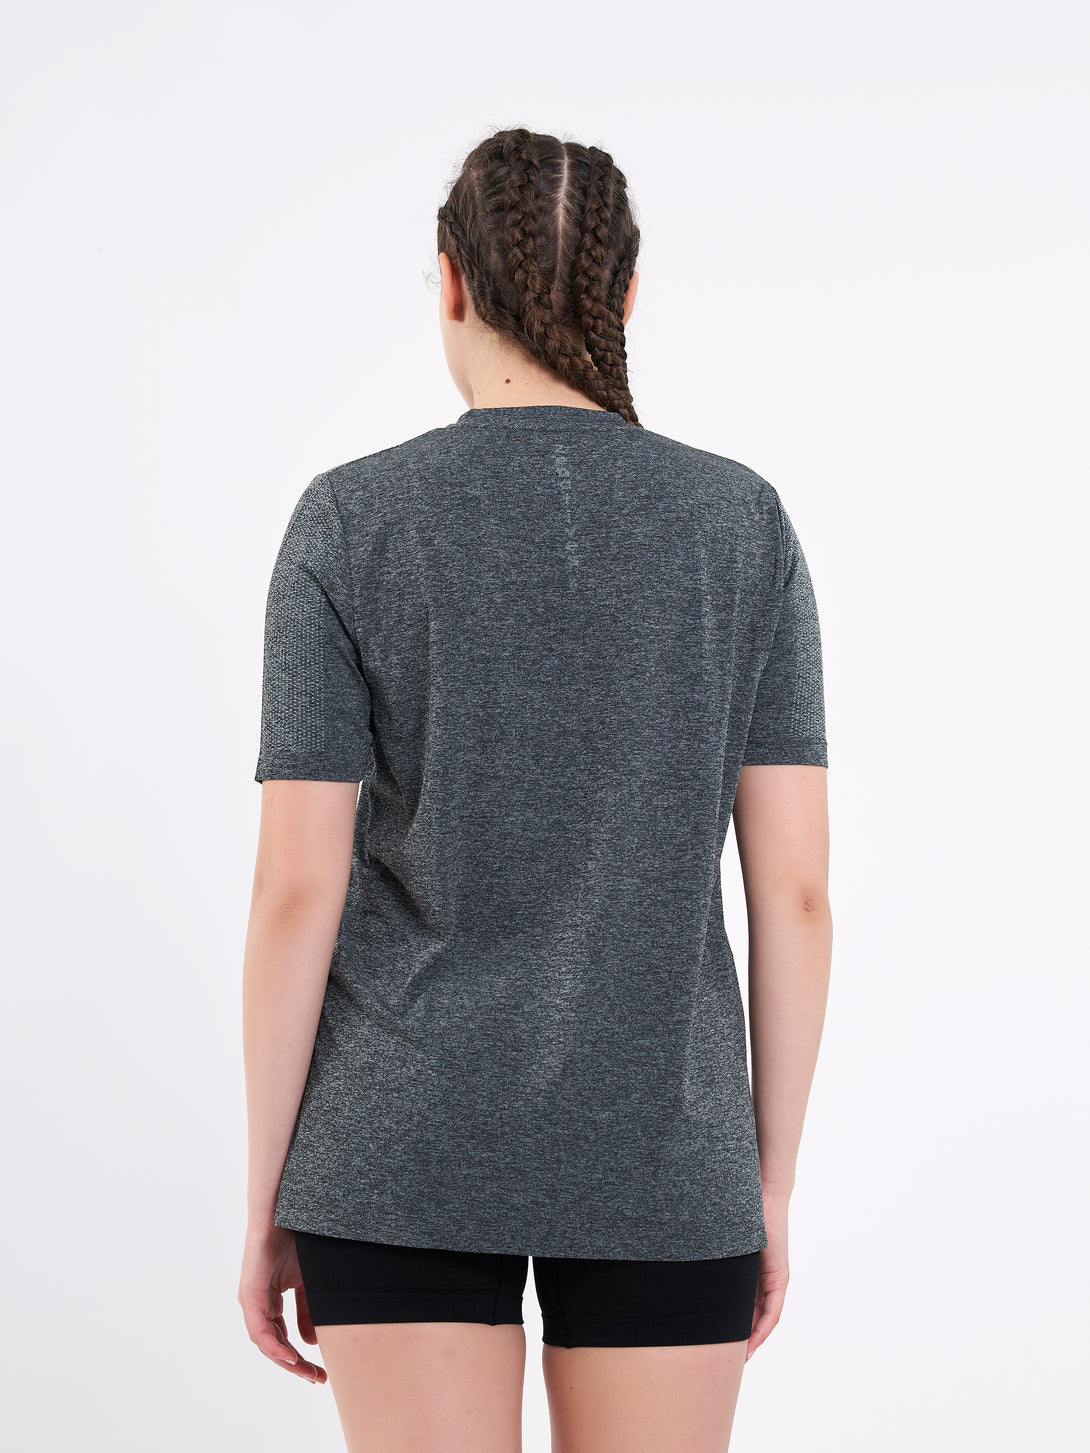 A Woman Wearing Deep Black Color Unisex Seamless Melange T-Shirt. Enhanced Comfort